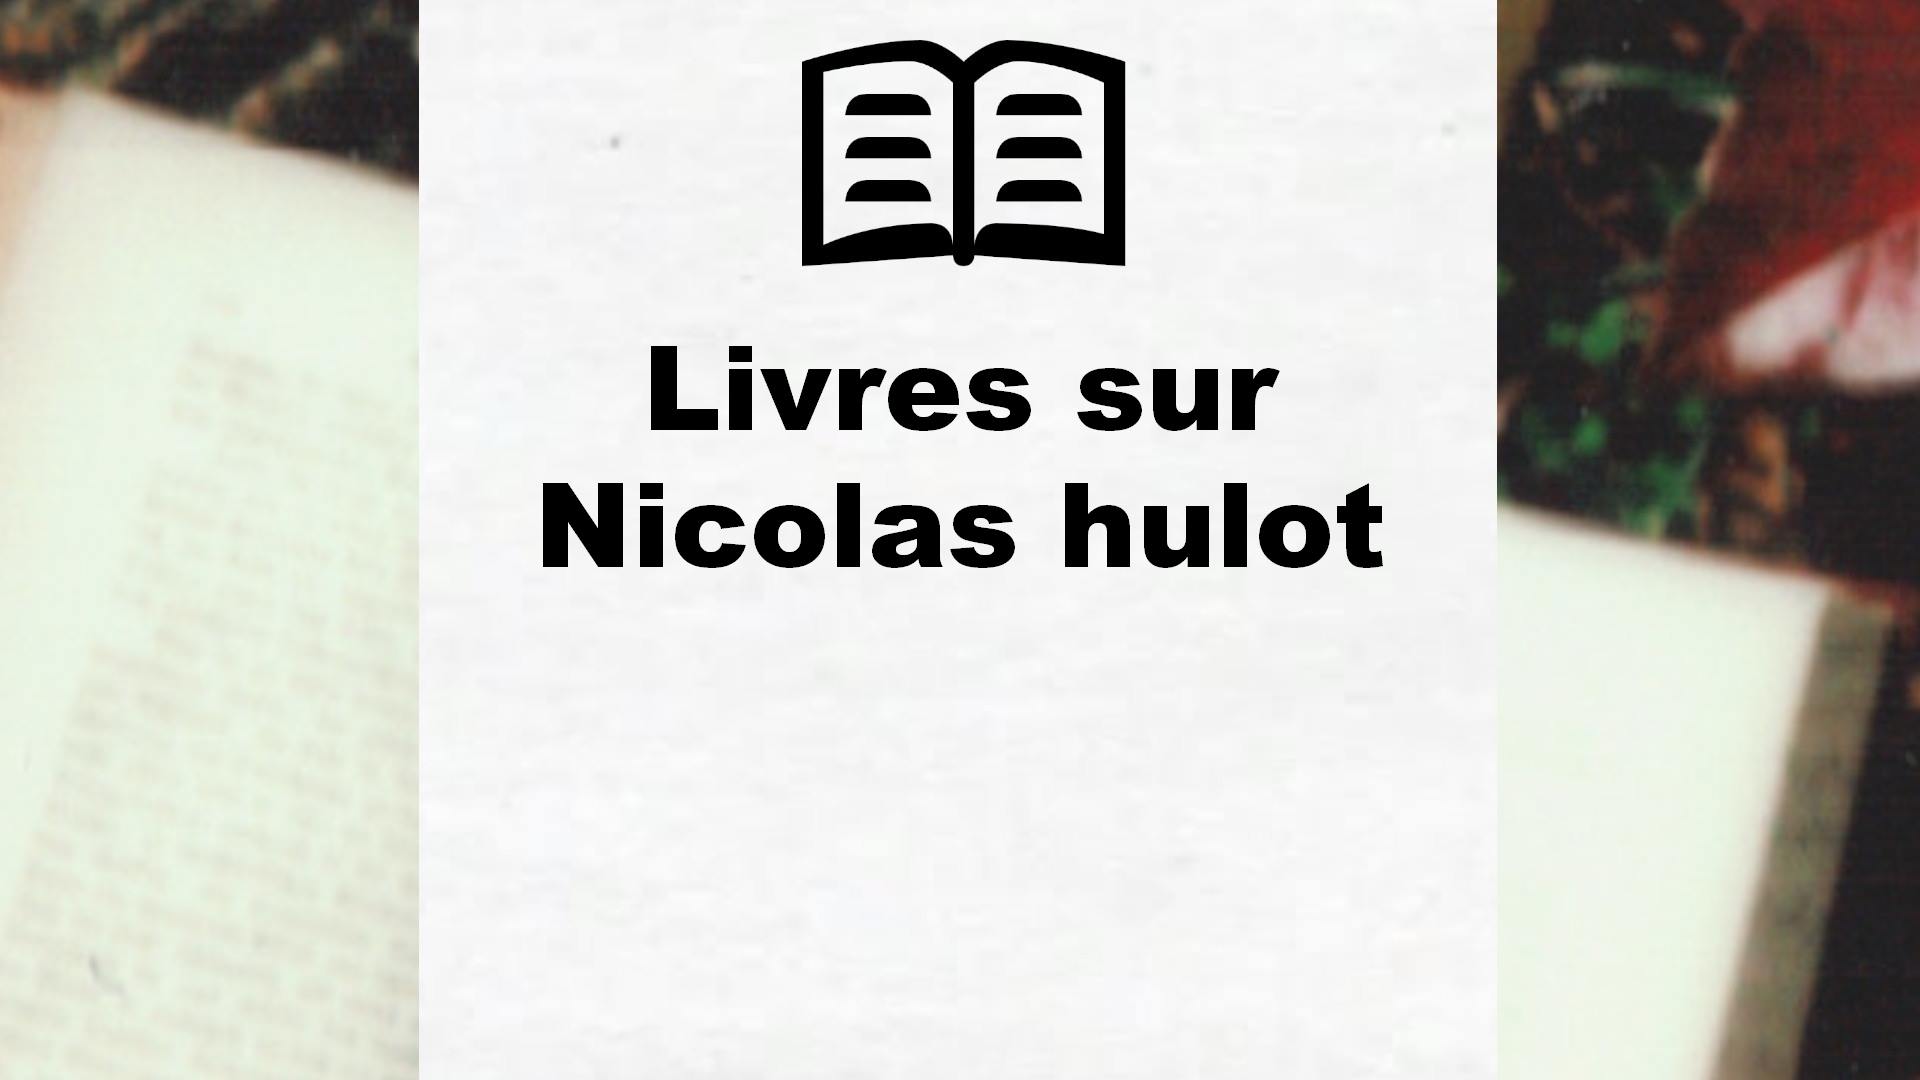 Livres sur Nicolas hulot